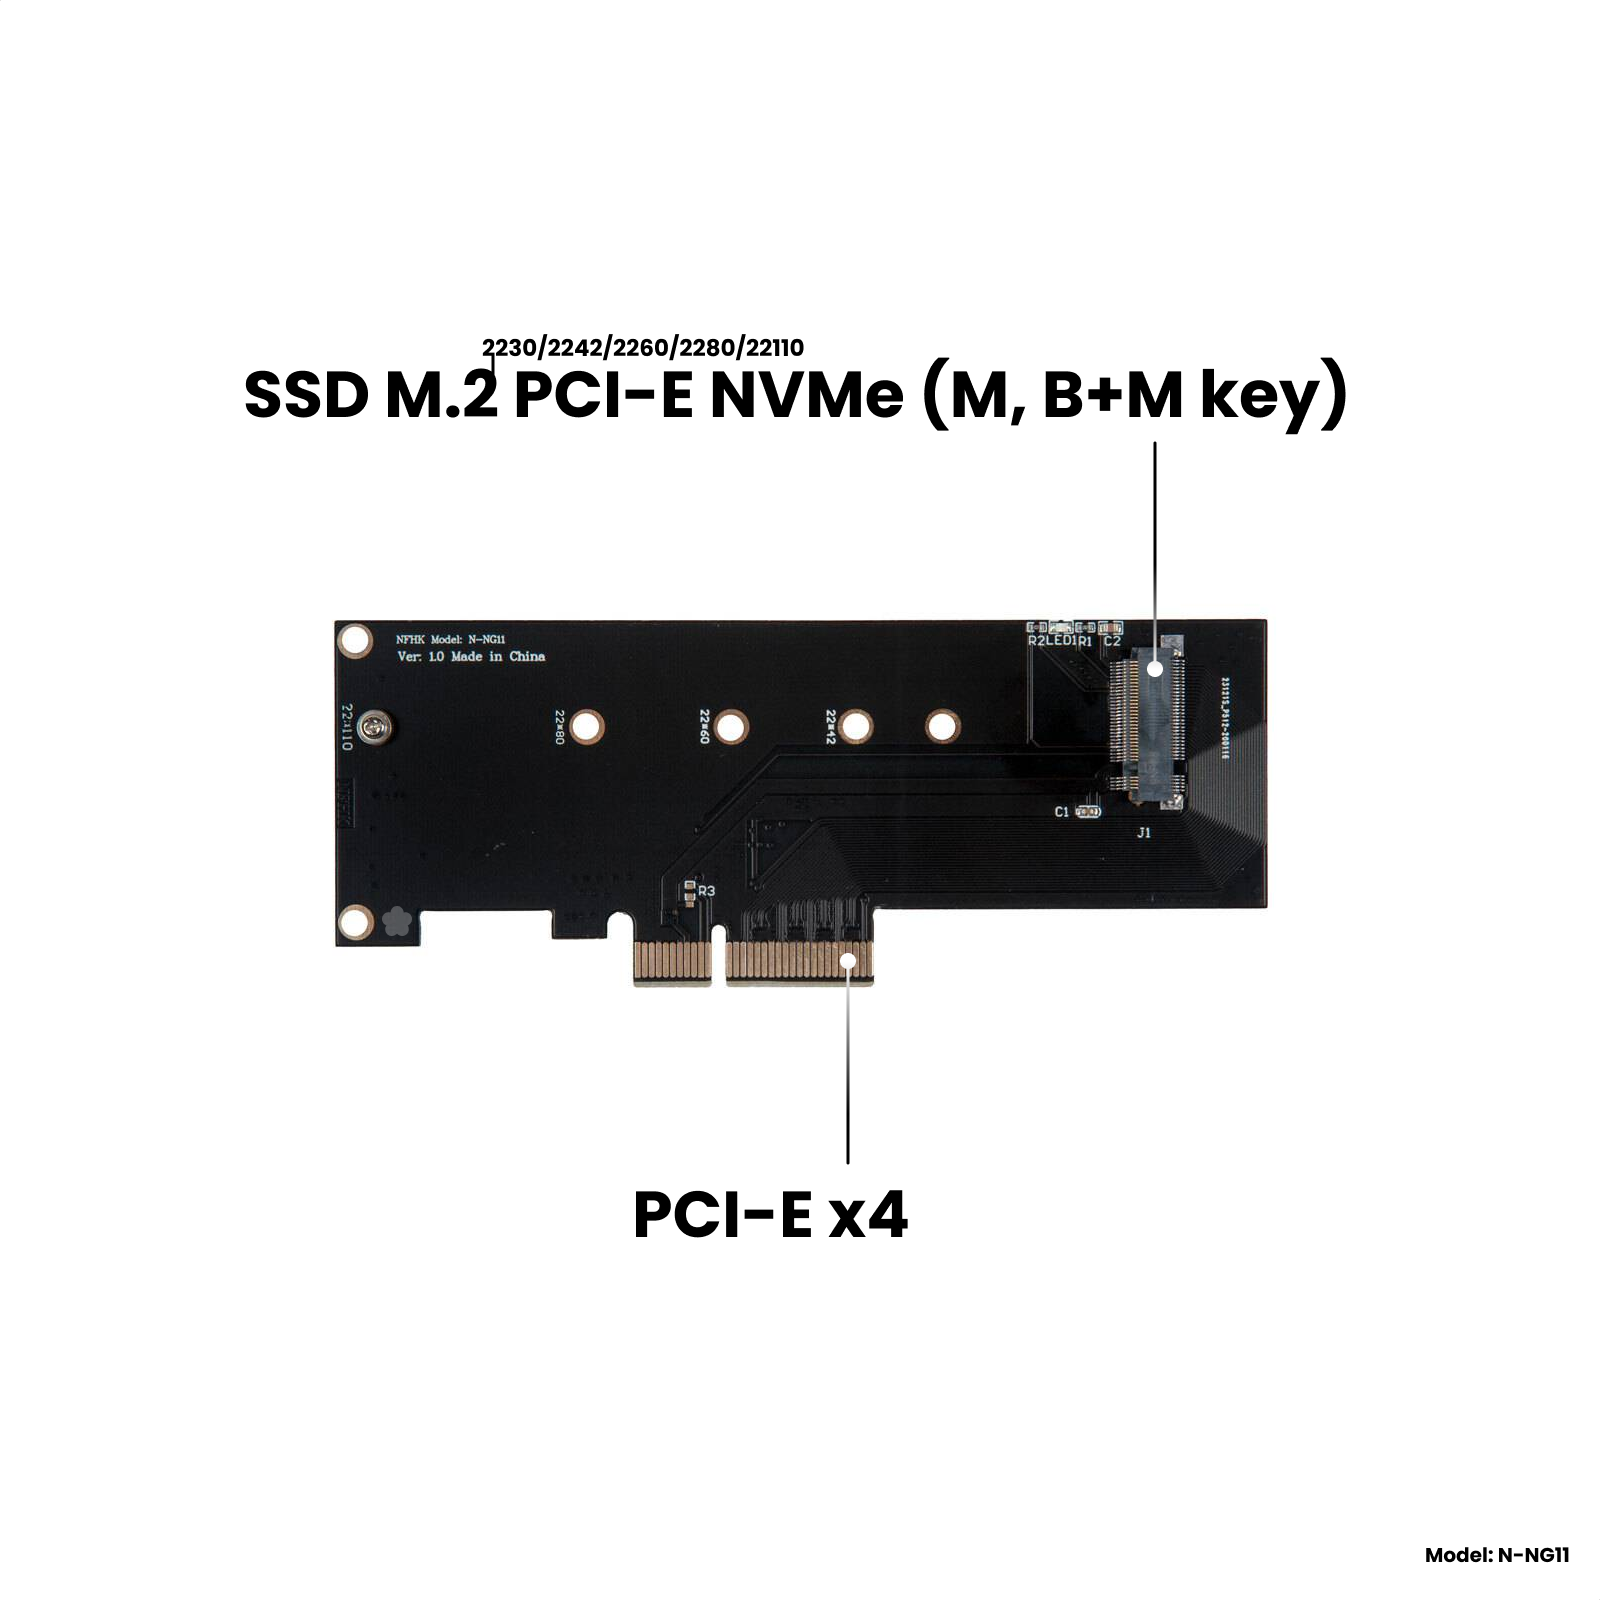 Адаптер-переходник (плата расширения) для установки SSD M.2 2230-22110 PCI-E NVMe (M B+M key) в слот PCI-E 3.0/4.0 x4/x8/x16 NHFK N-NG11